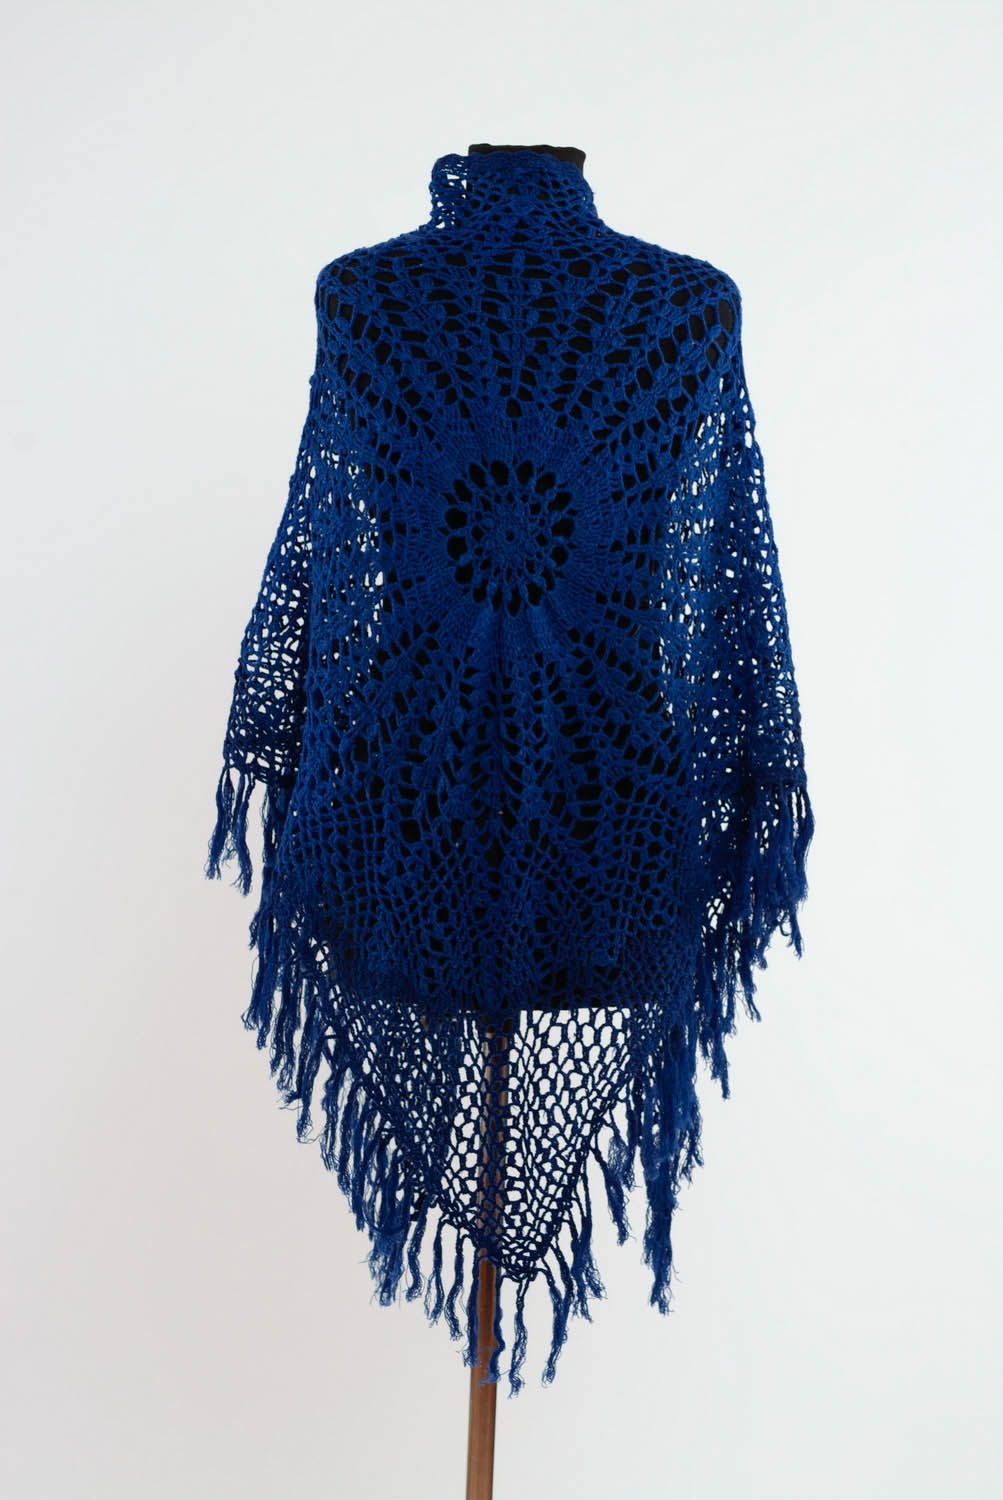 BUY Deep blue shawl 477907185 - HANDMADE GOODS at MADEHEART.COM